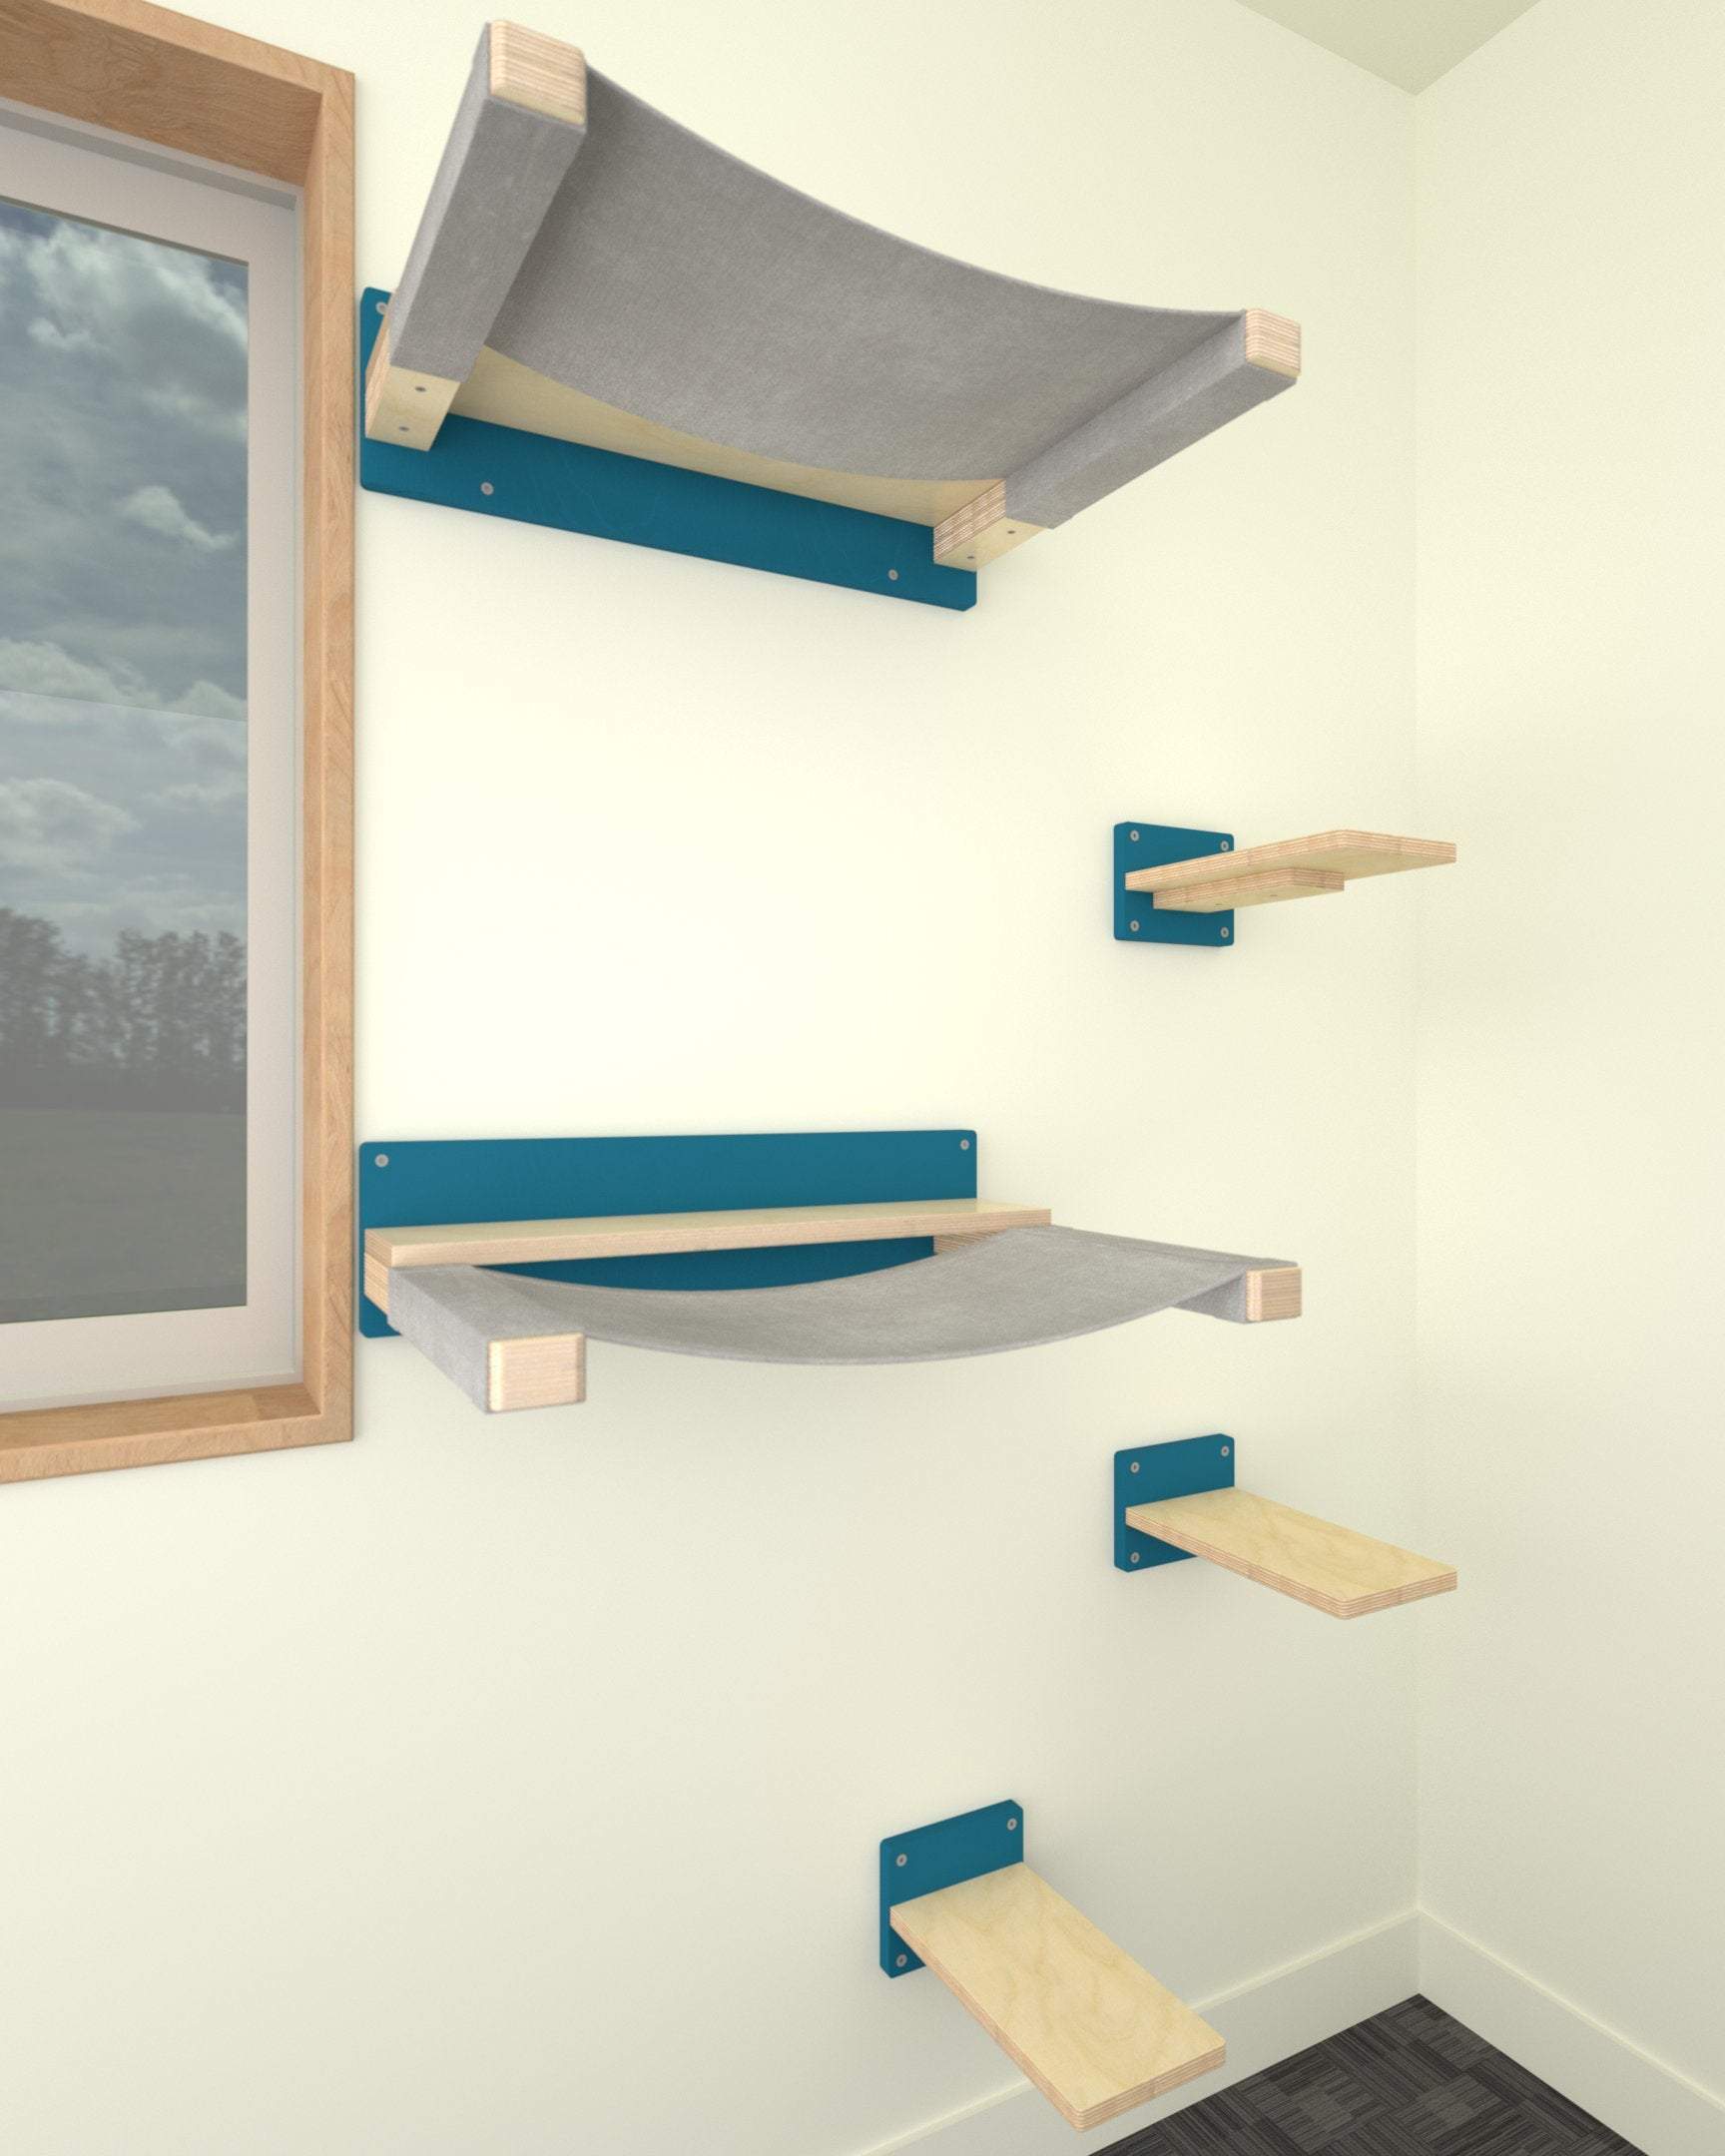 Cat Wall Shelf Step Bed Hammock Bundle - Wally Snooze Bundle - Scratchy Things Premium Pet Furniture